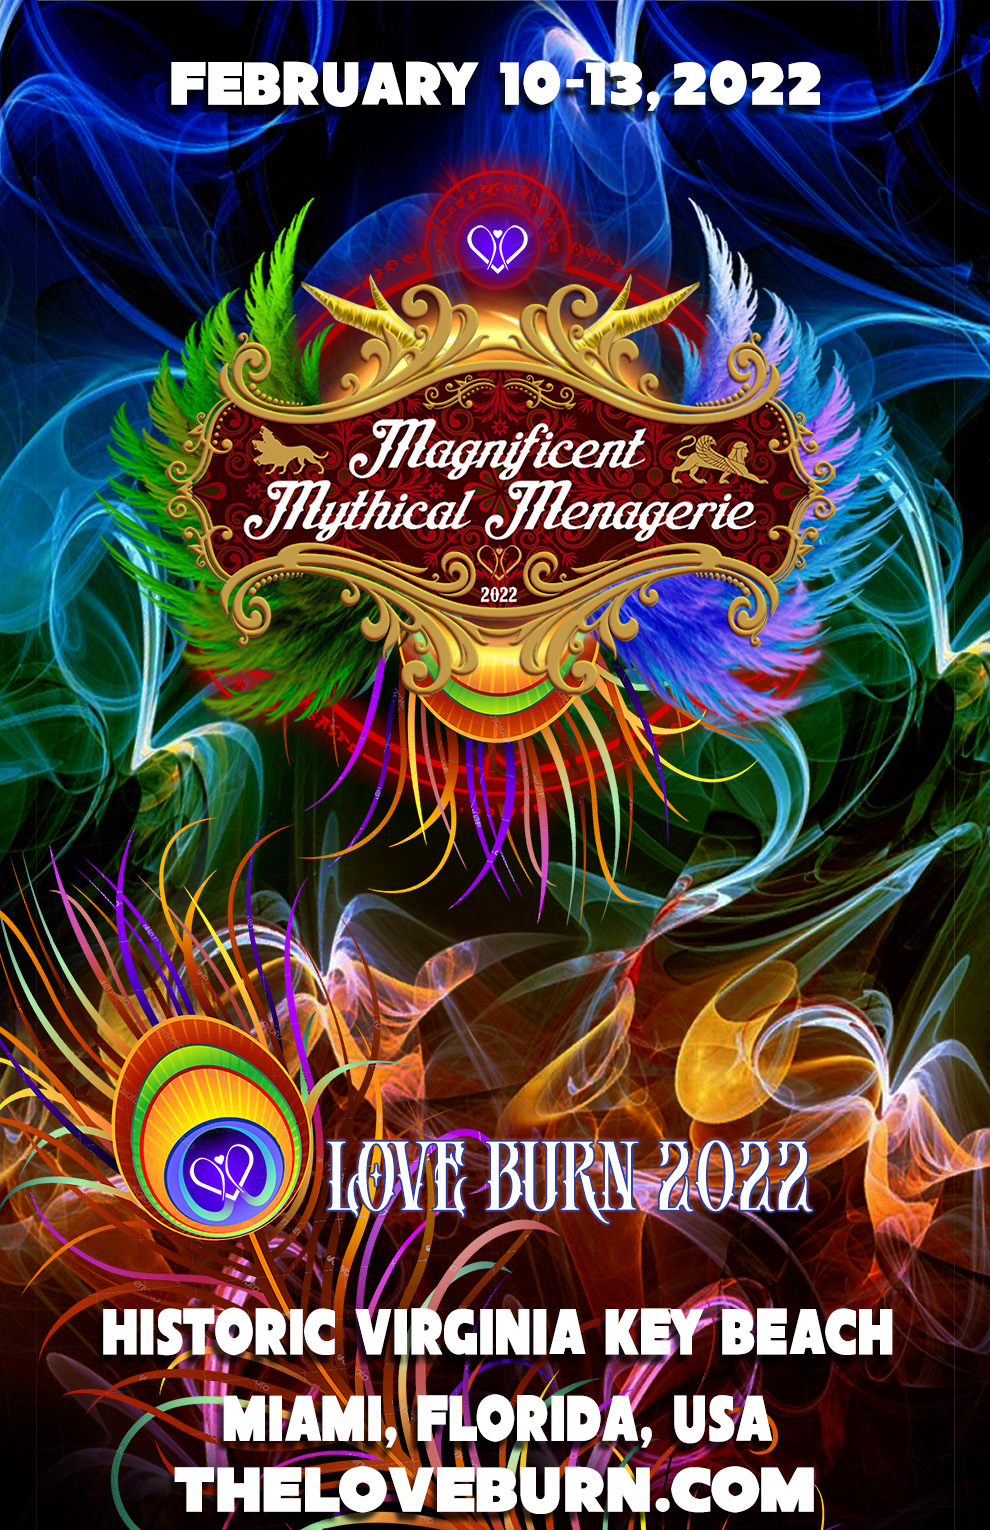 Love Burn Official Regional Burning Man in Miami, Florida